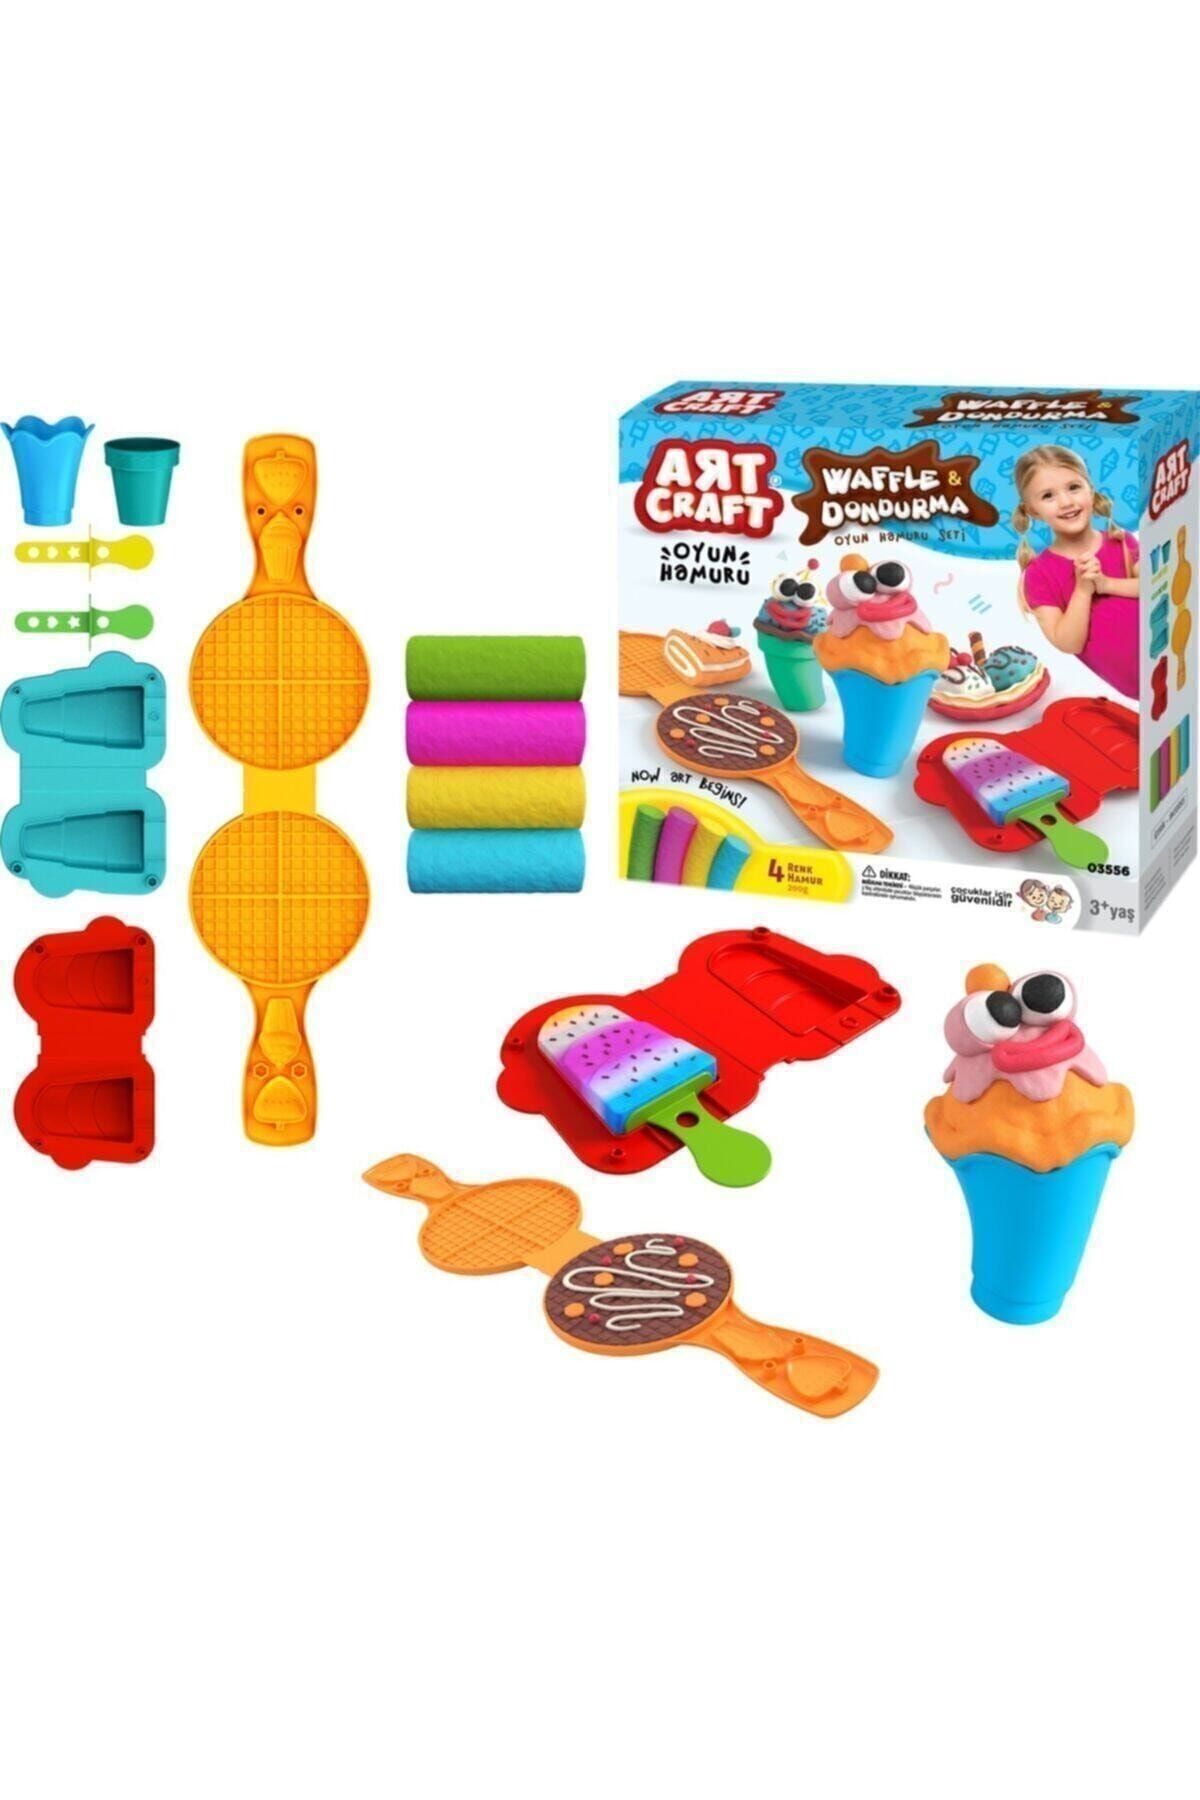 DEDE Toys Art Craft Waffle & Dondurma Oyun Hamuru Seti 200 Gr